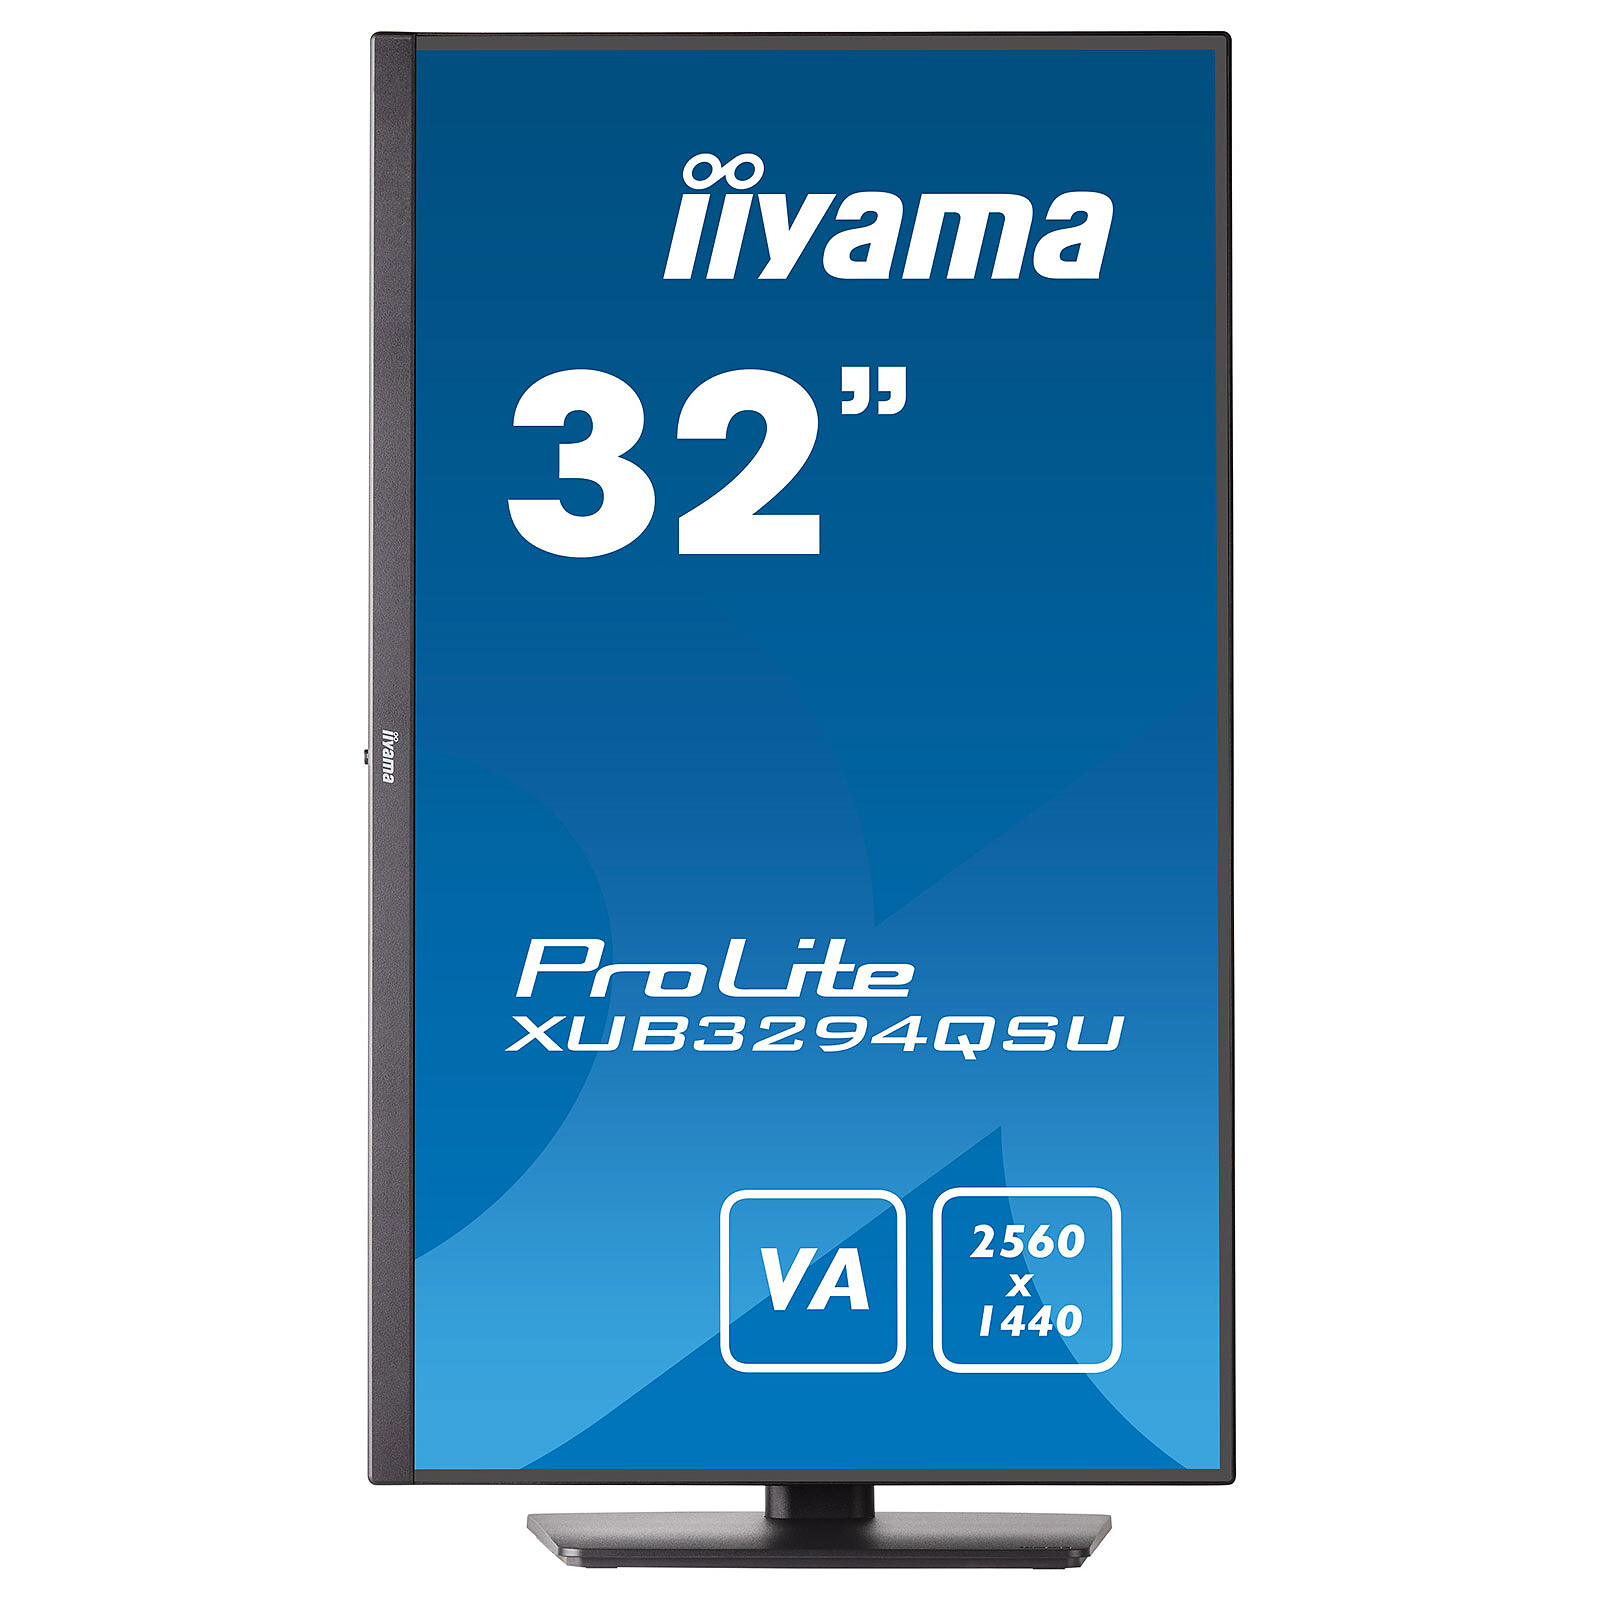 iiyama .5" LED   XUBQSU B1   PC monitor   LDLC 3 year warranty